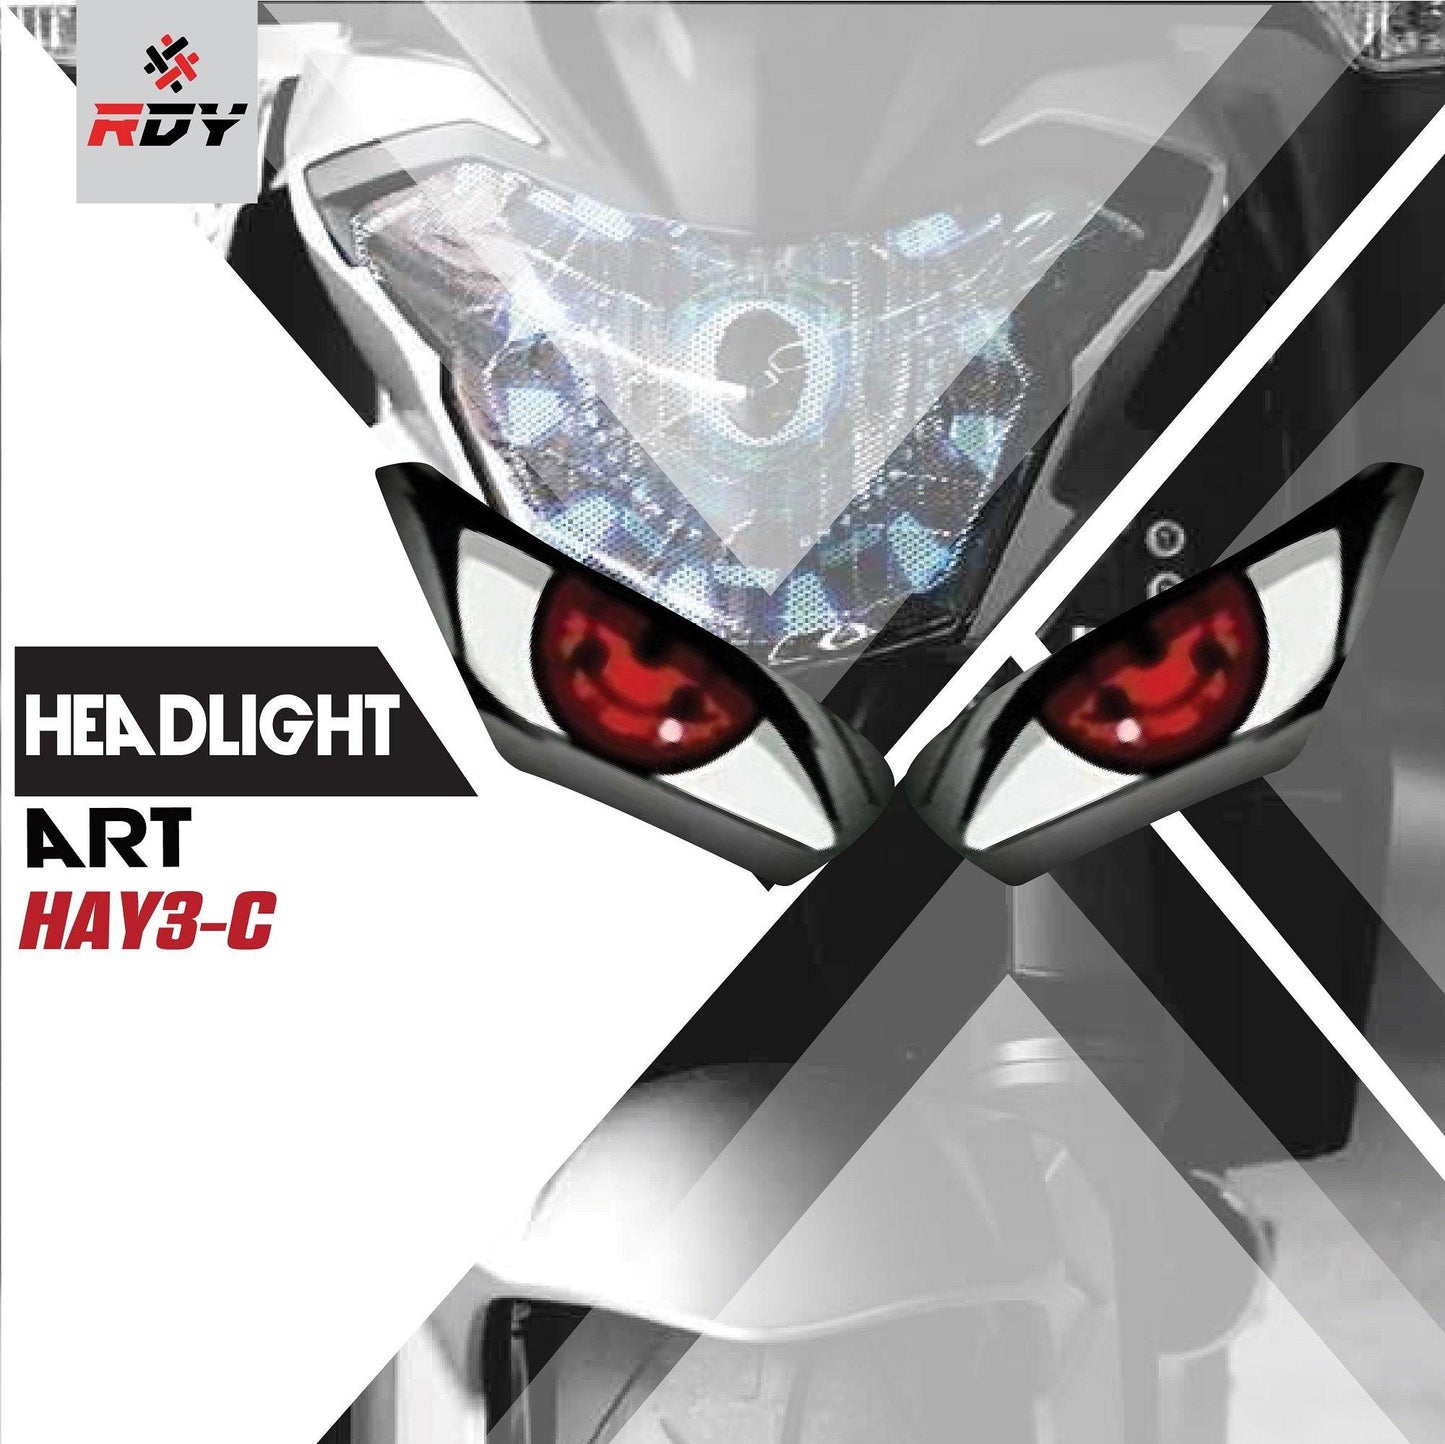 RDY Headlight Art fits for Yamaha XMAX - Durian Bikers